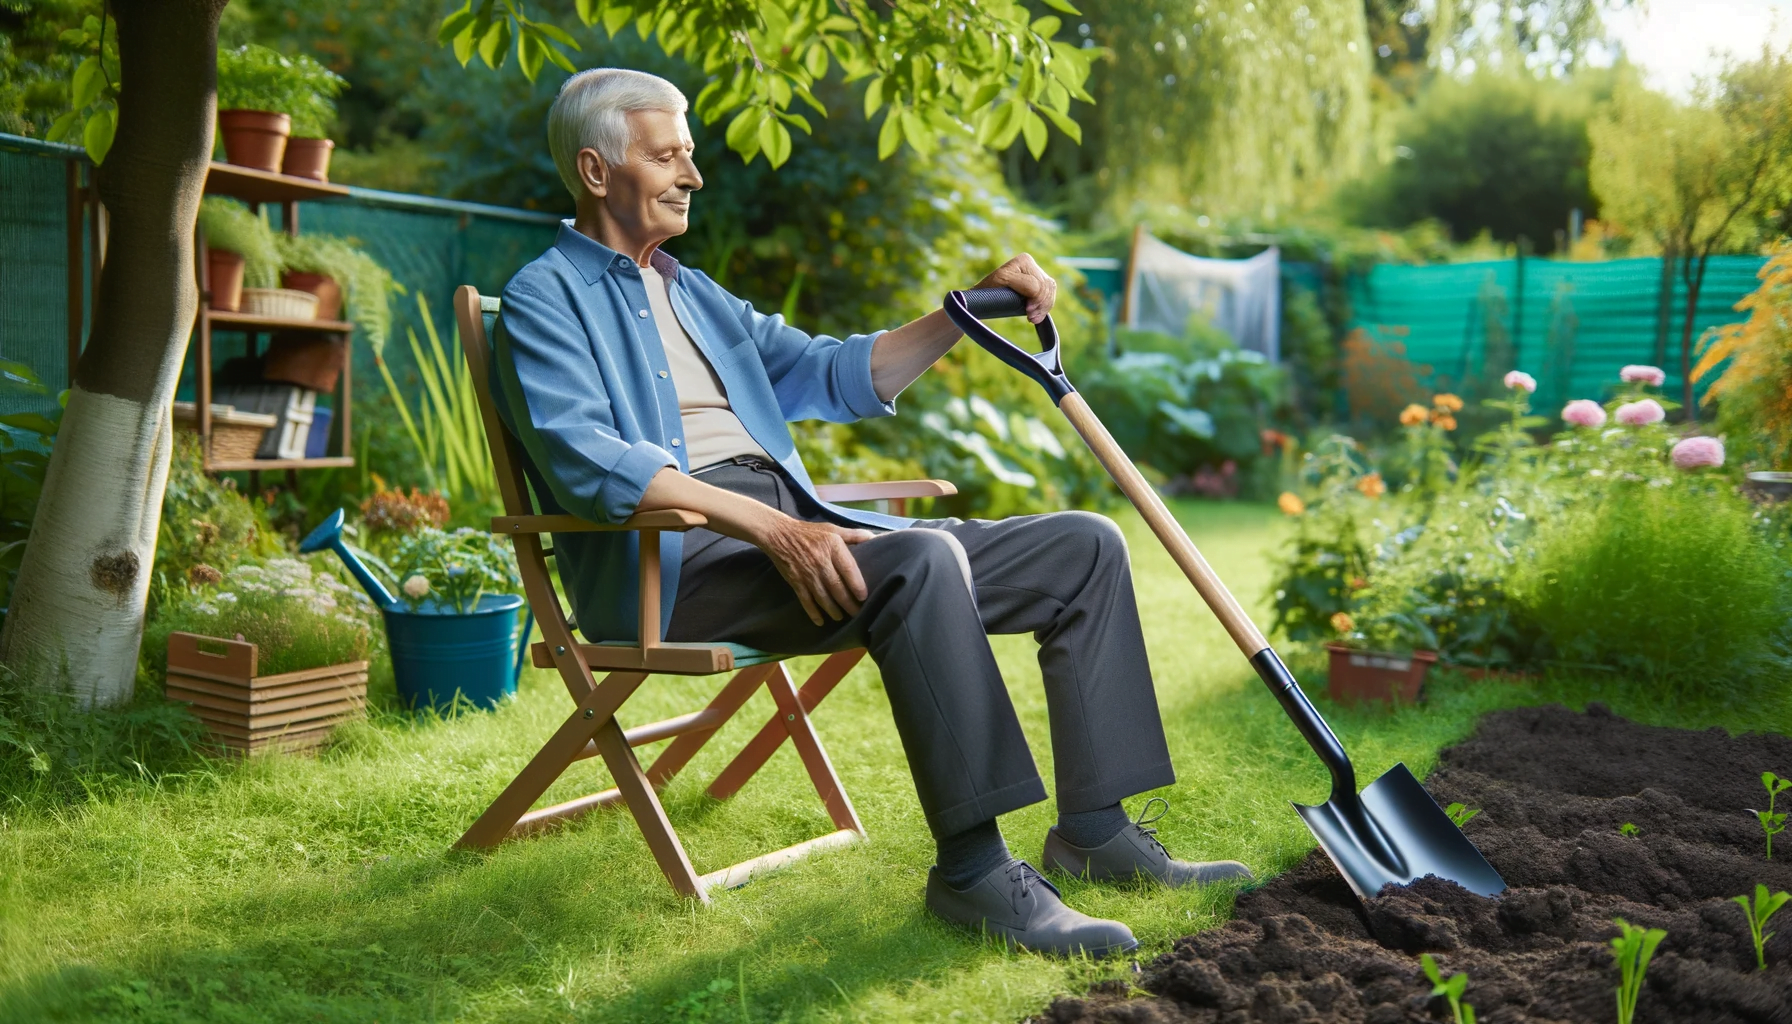 Gardening Tools For Seniors Guide